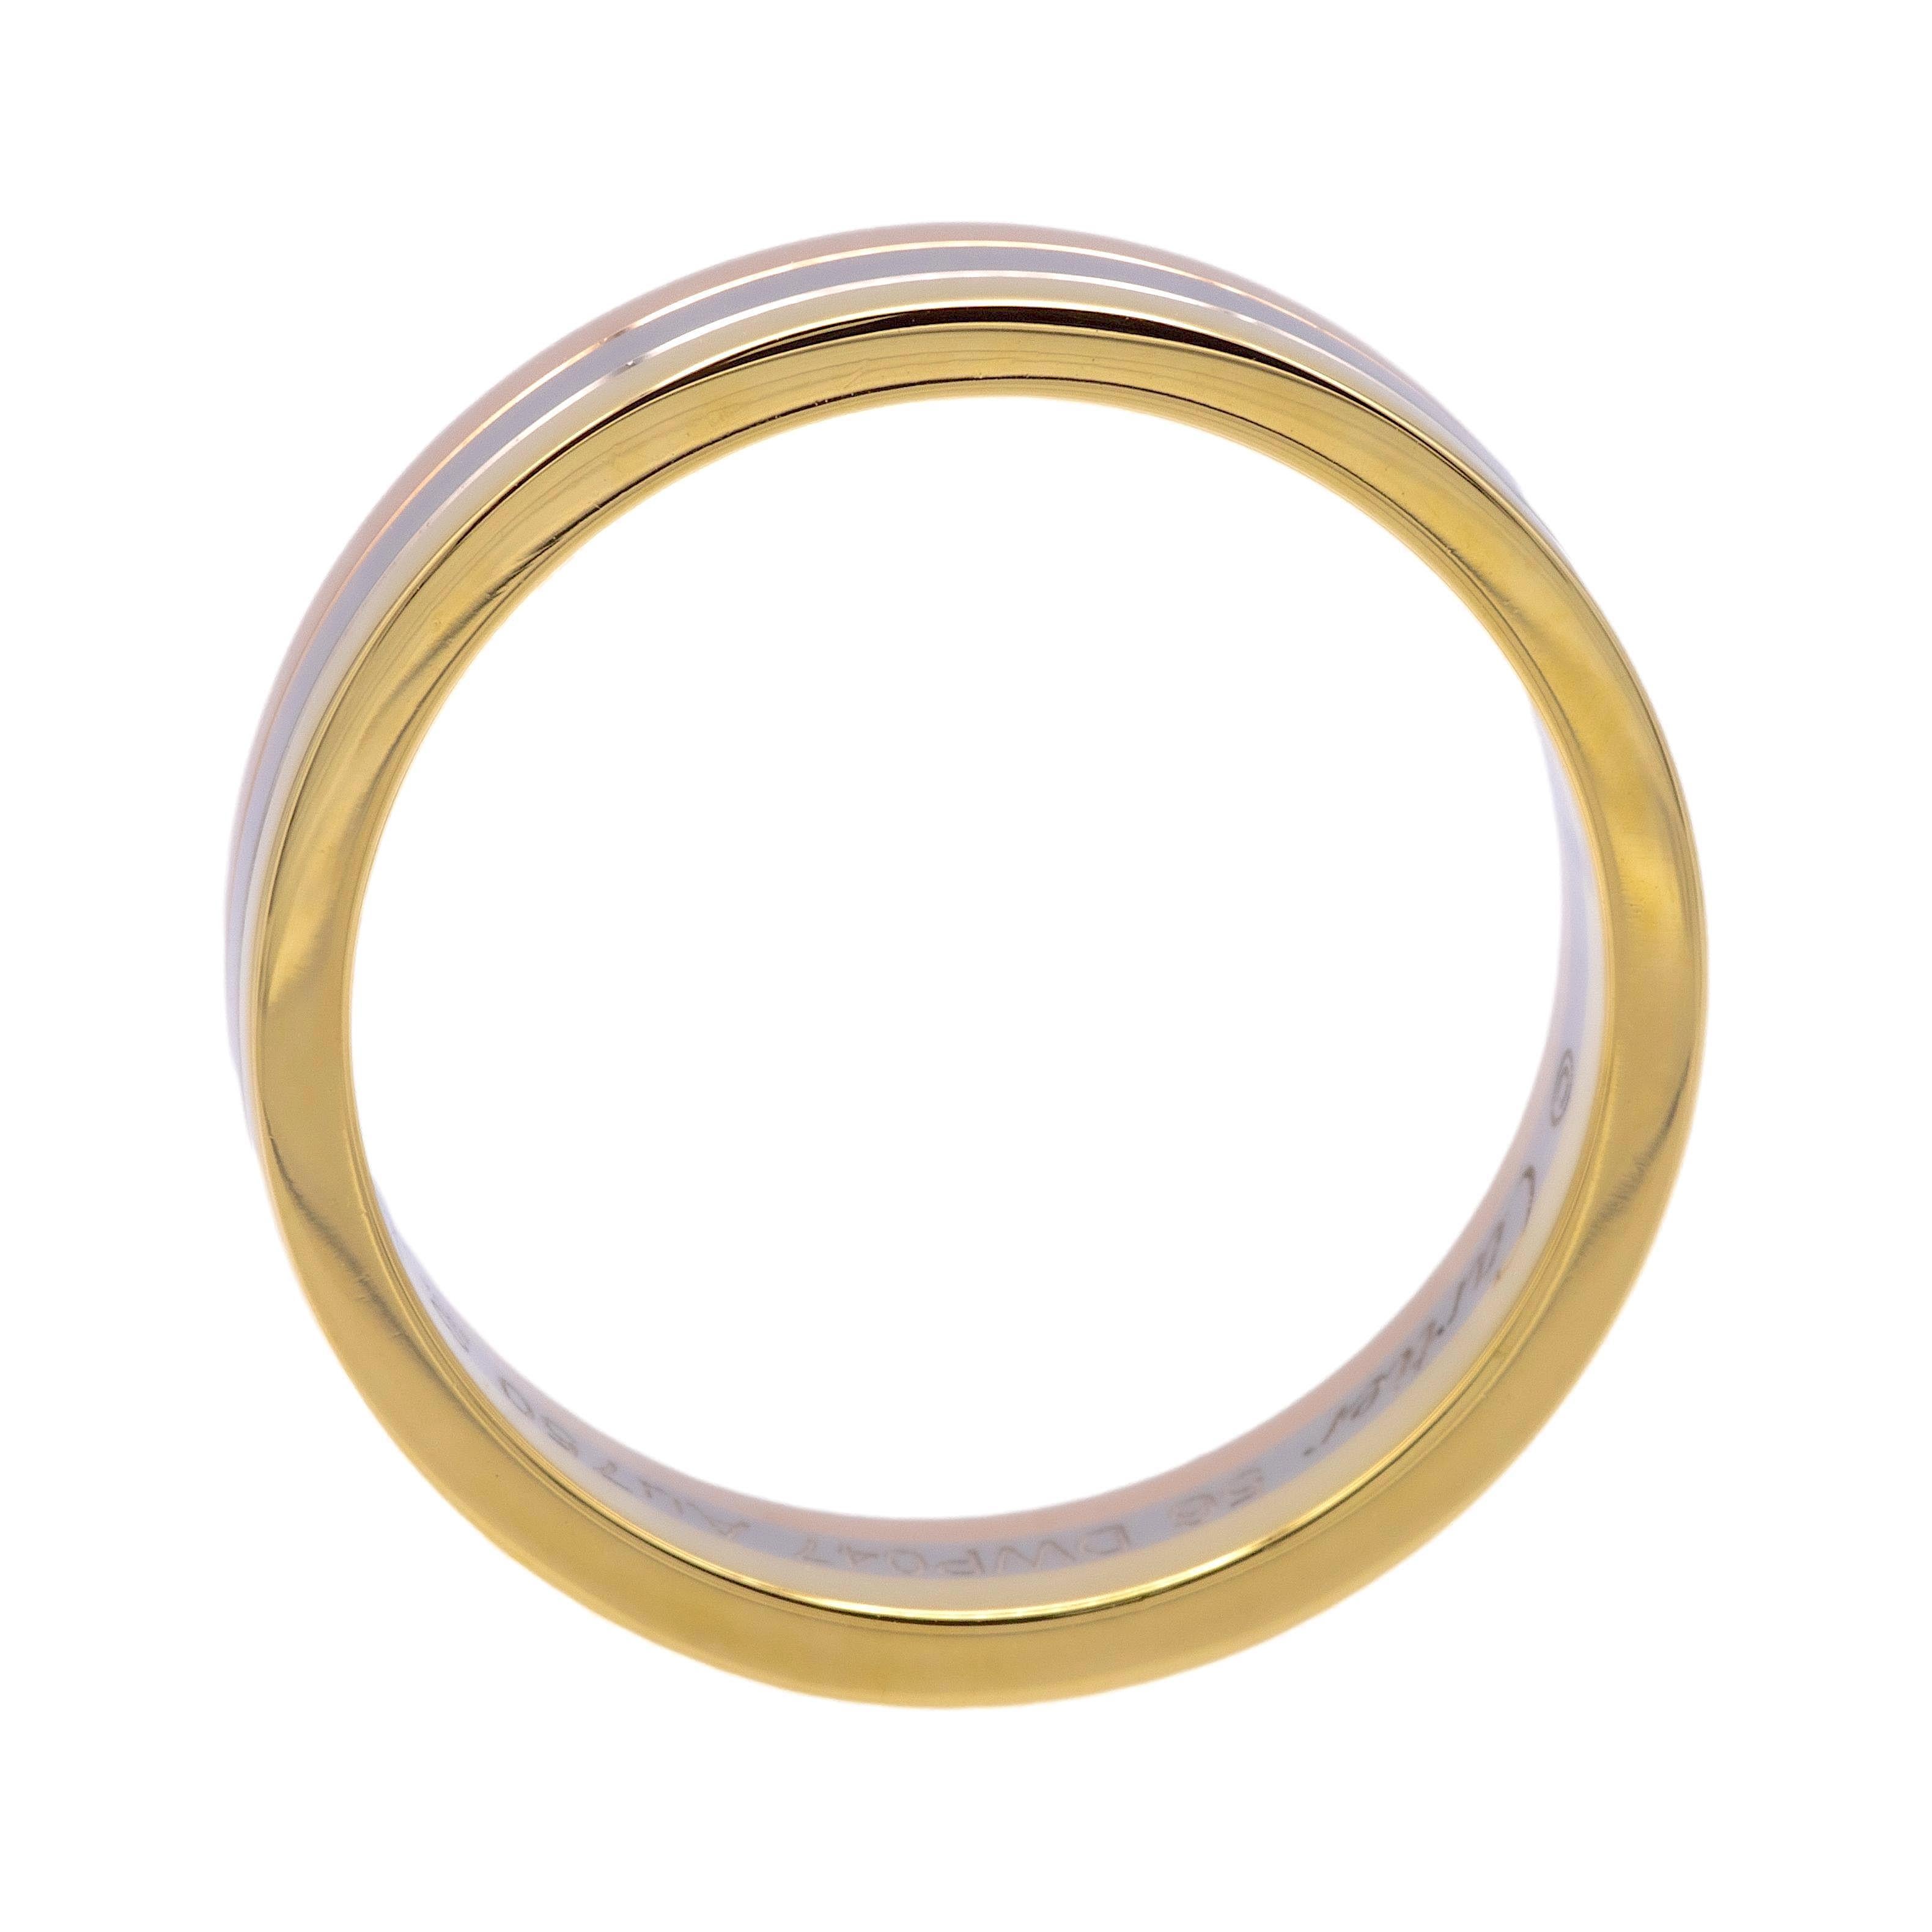 Vendome Louis Cartier 18K 3 Tone Gold Men's Wedding Band Ring Size 56/7.5 4.8mm For Sale 1